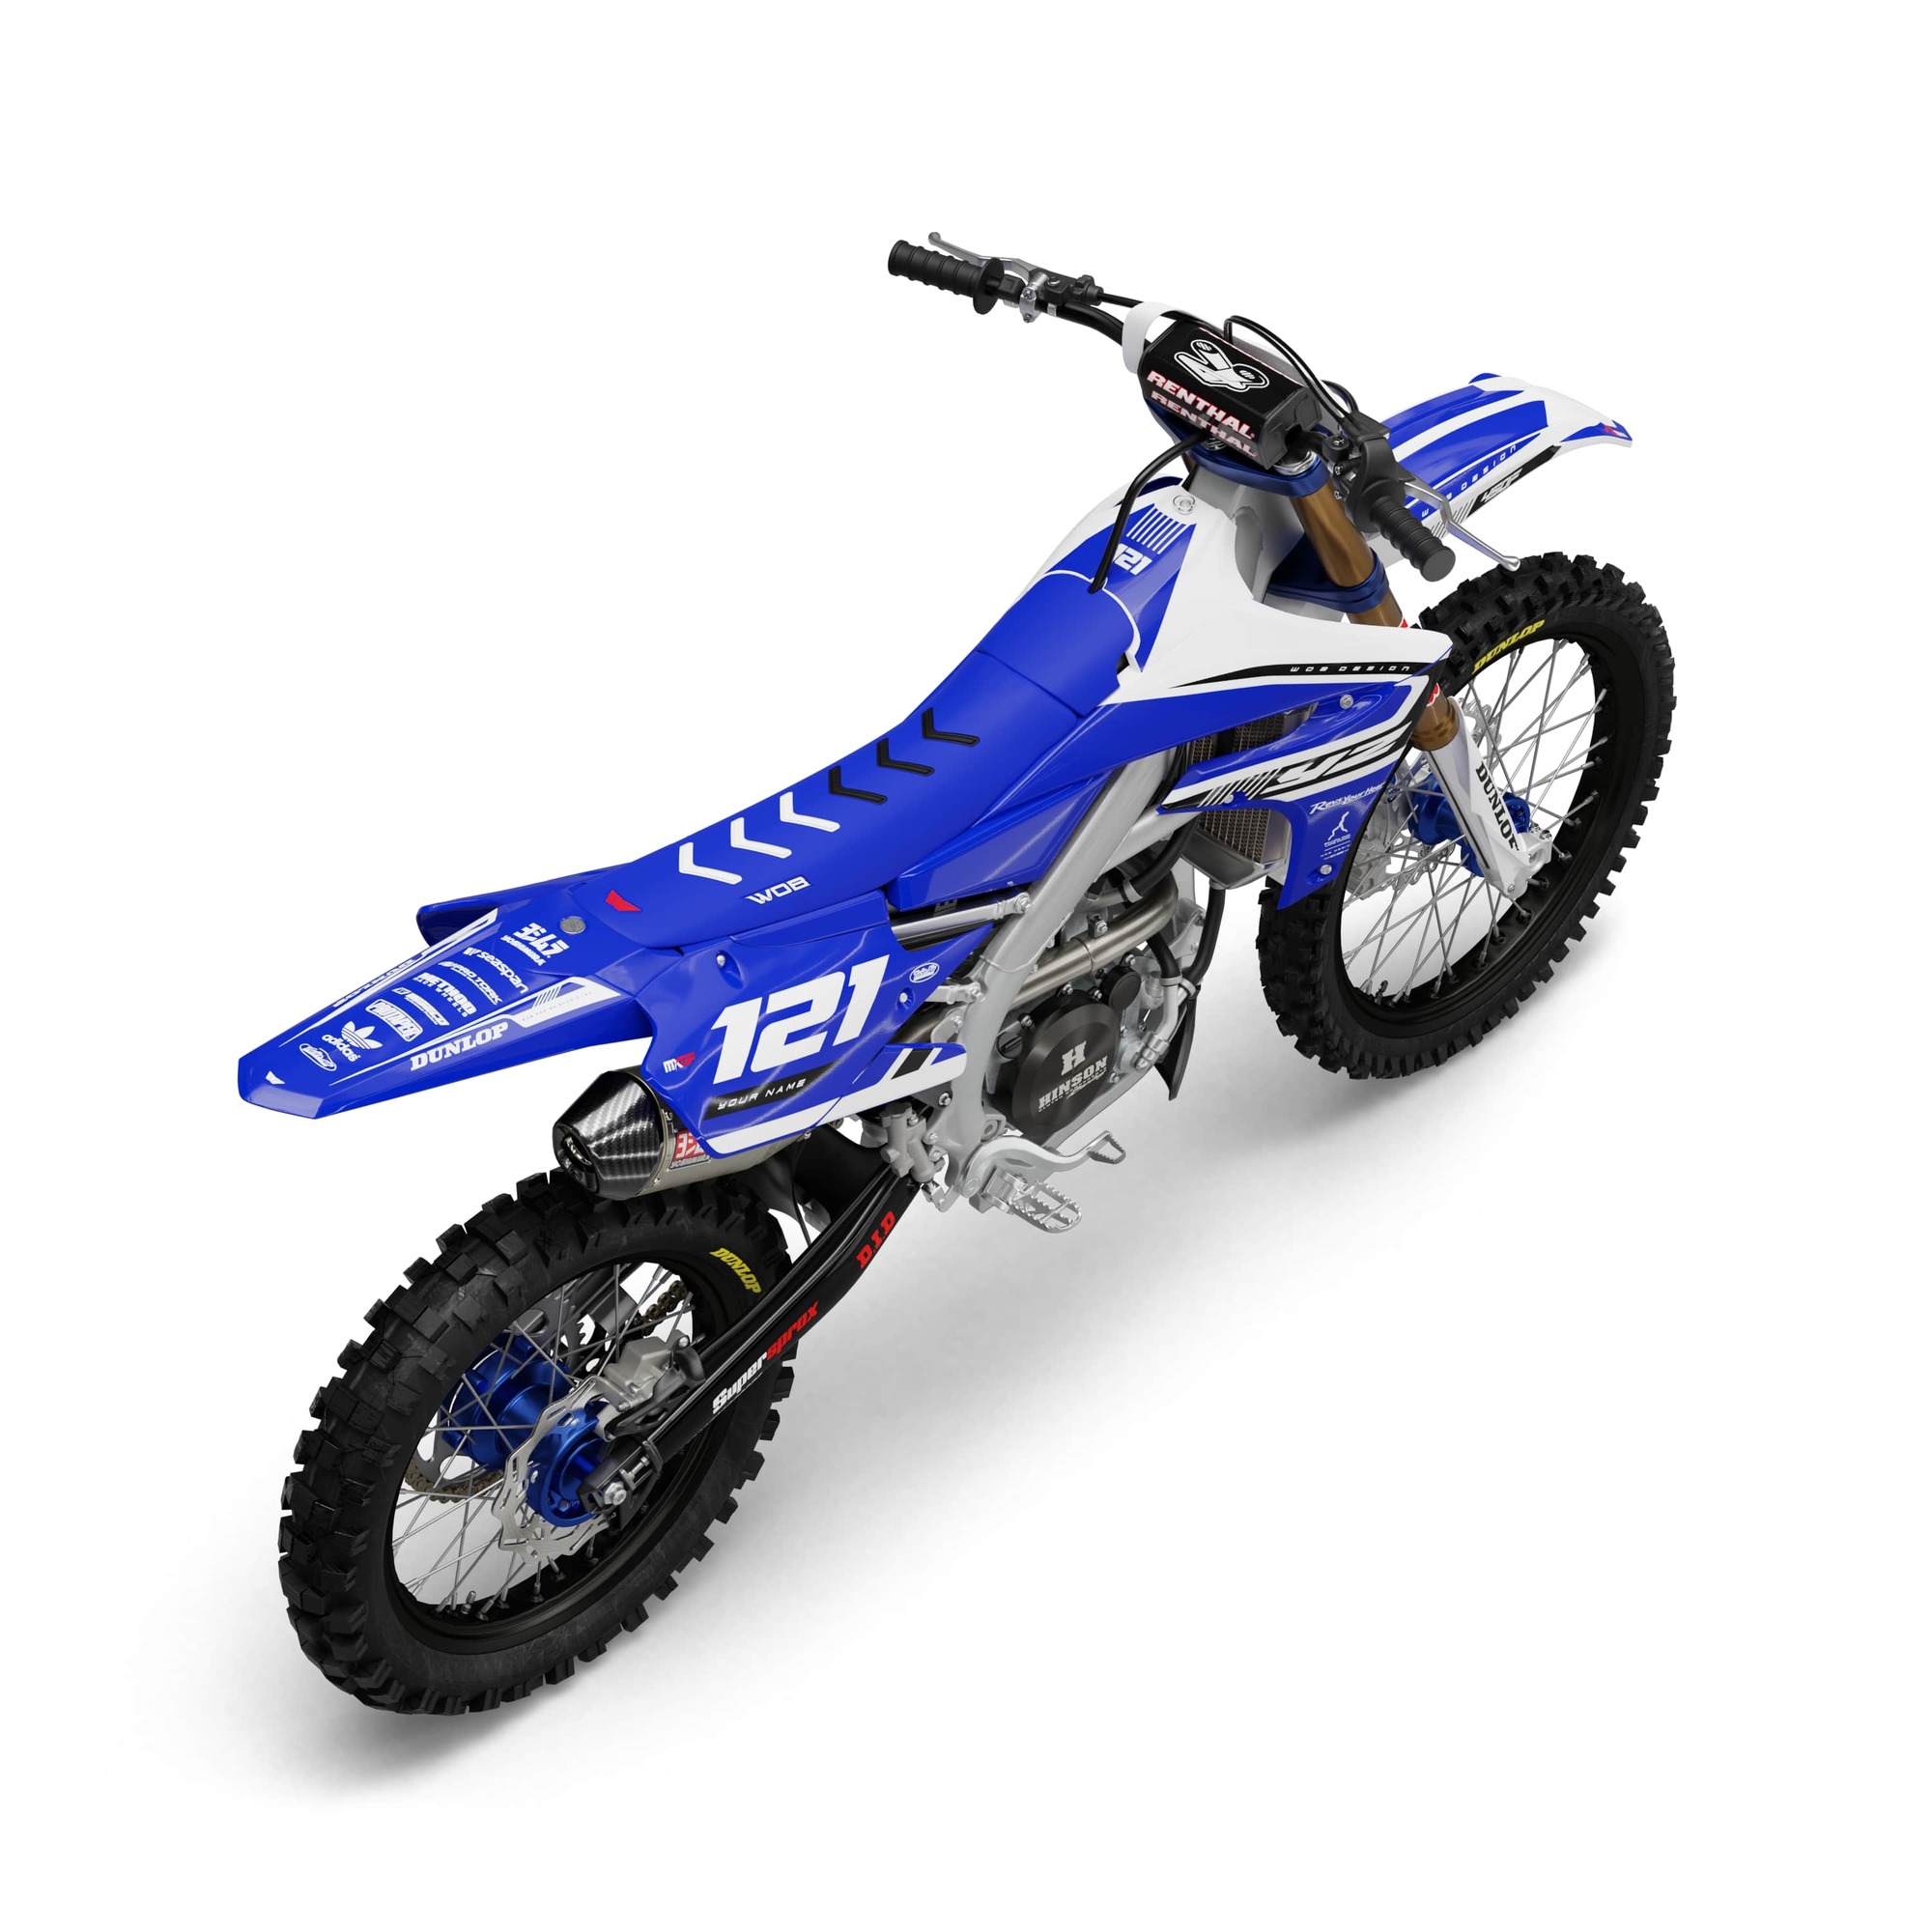 Yamaha core blue0010